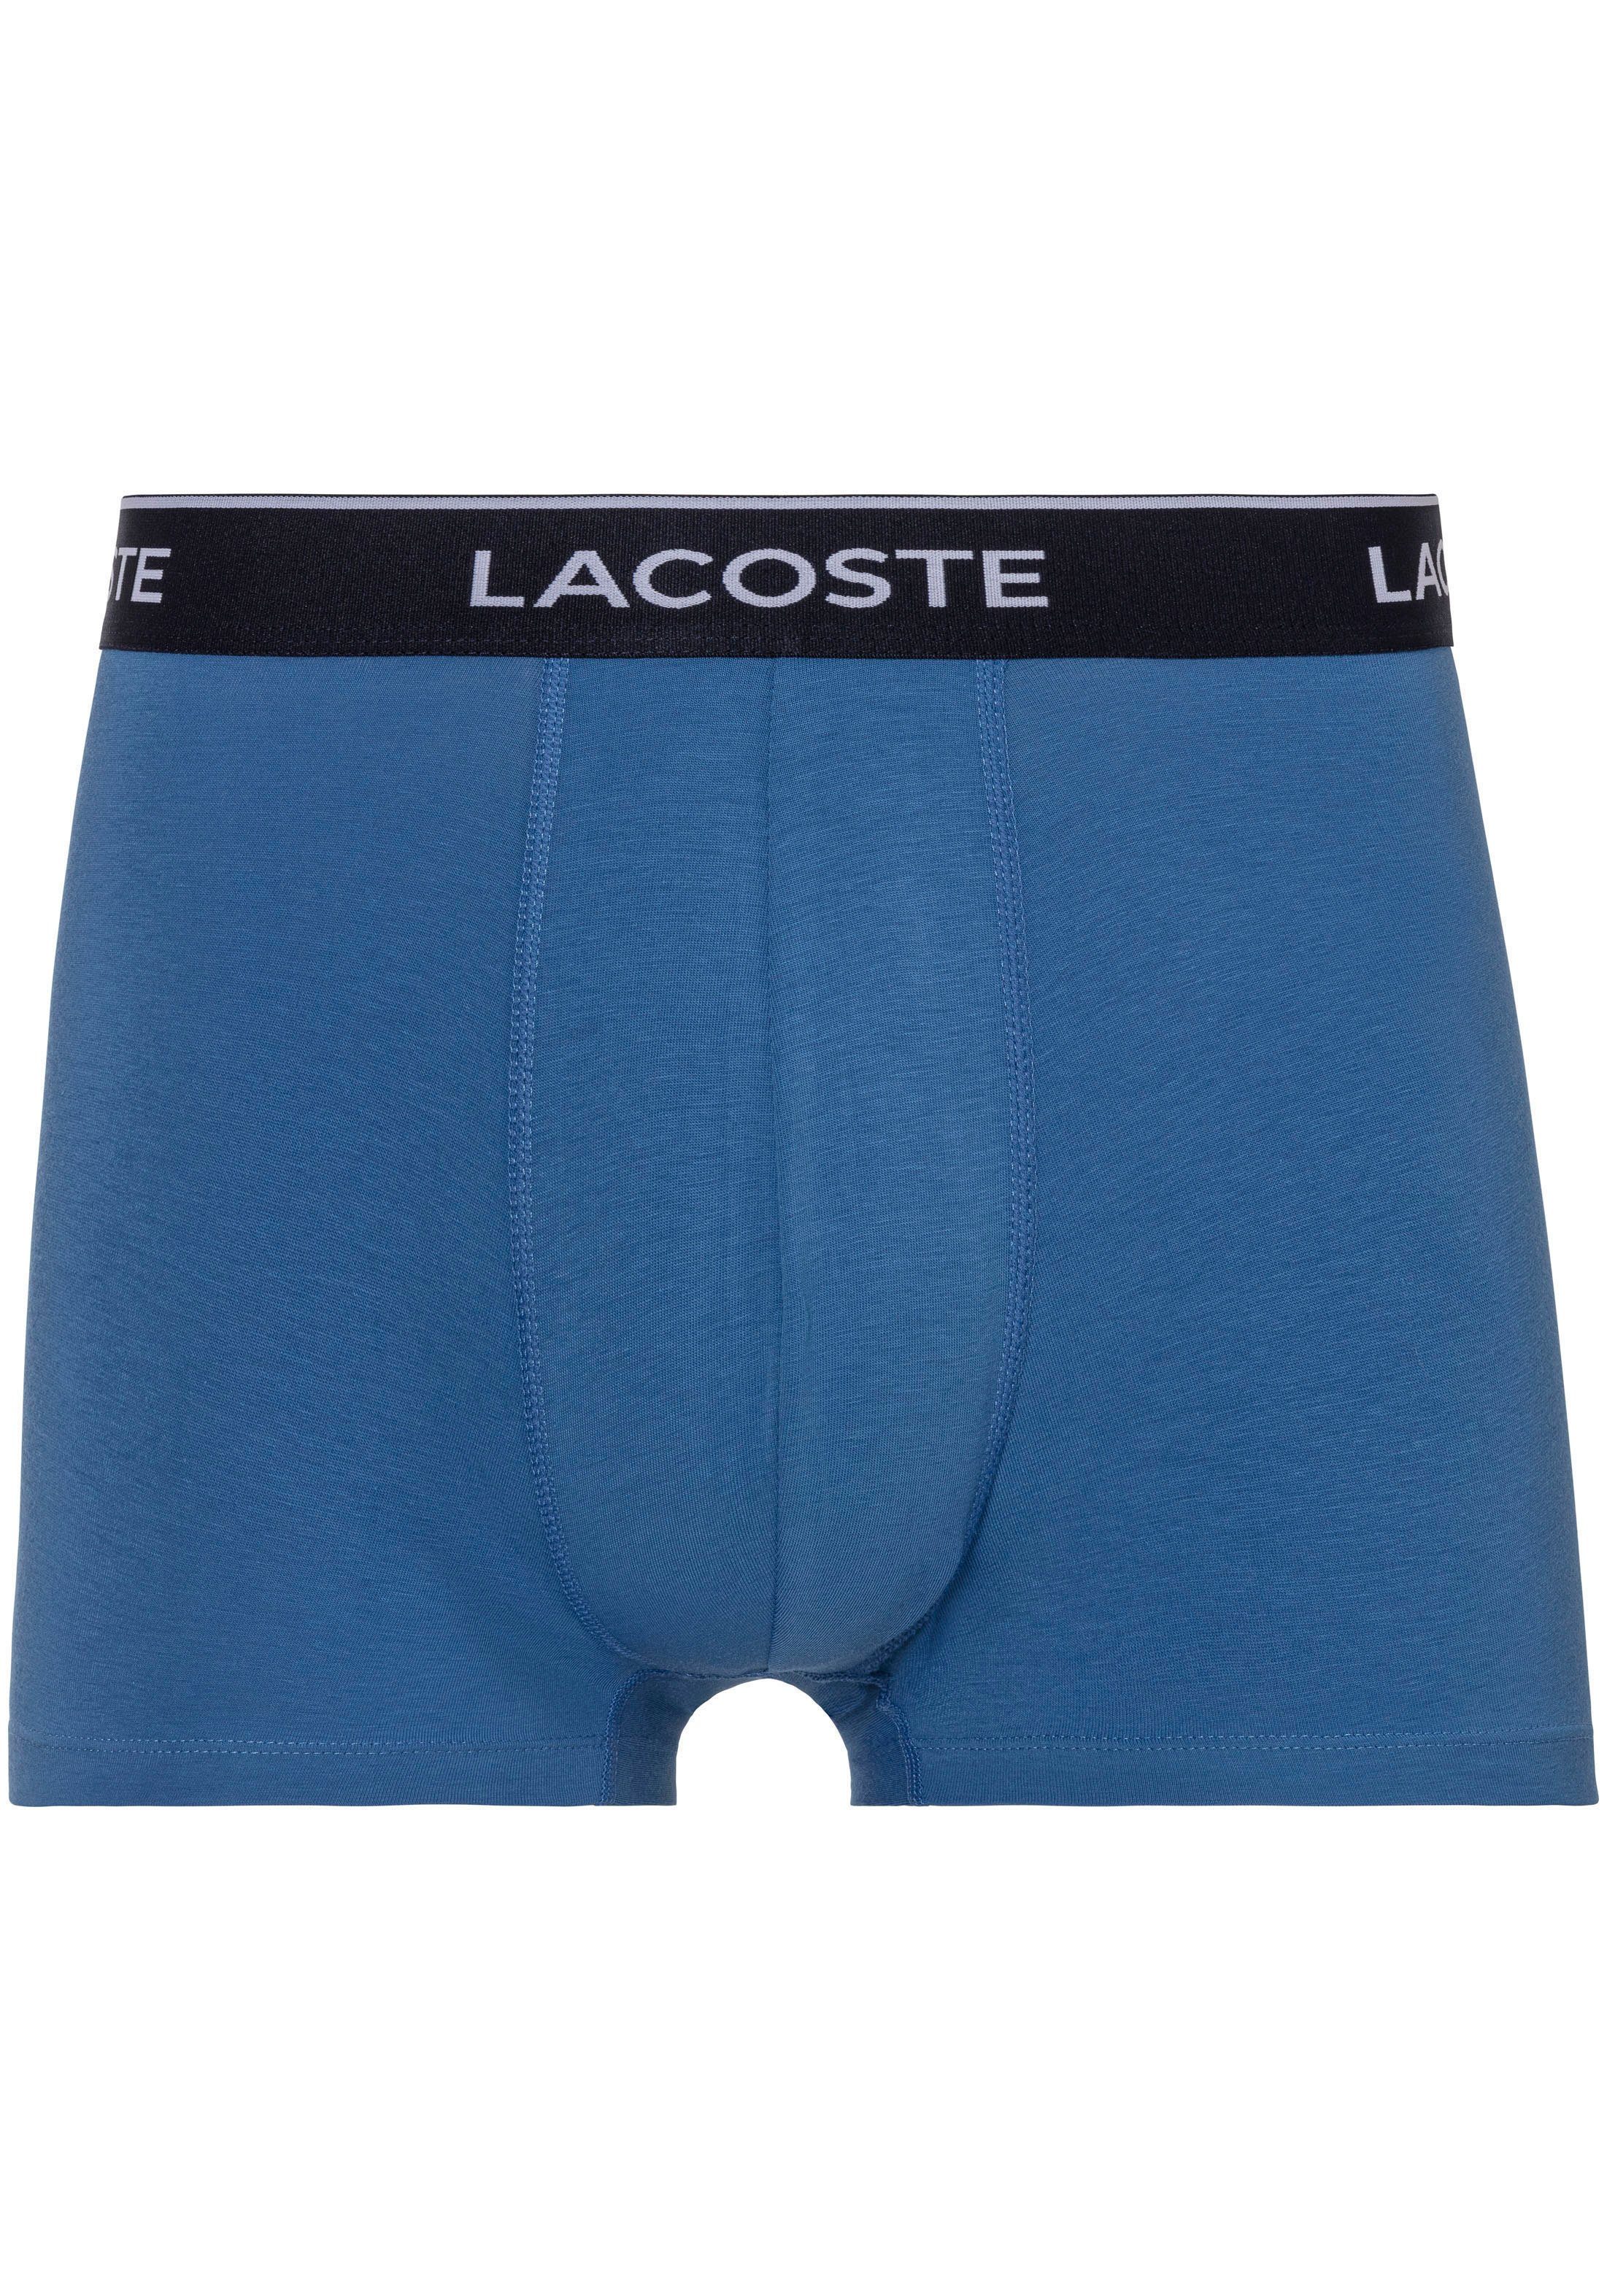 Premium Herren grau-blau-hb 3er-Pack) 3-St., Trunk atmungsaktivem Boxershorts Lacoste aus (Packung, eng Material Lacoste